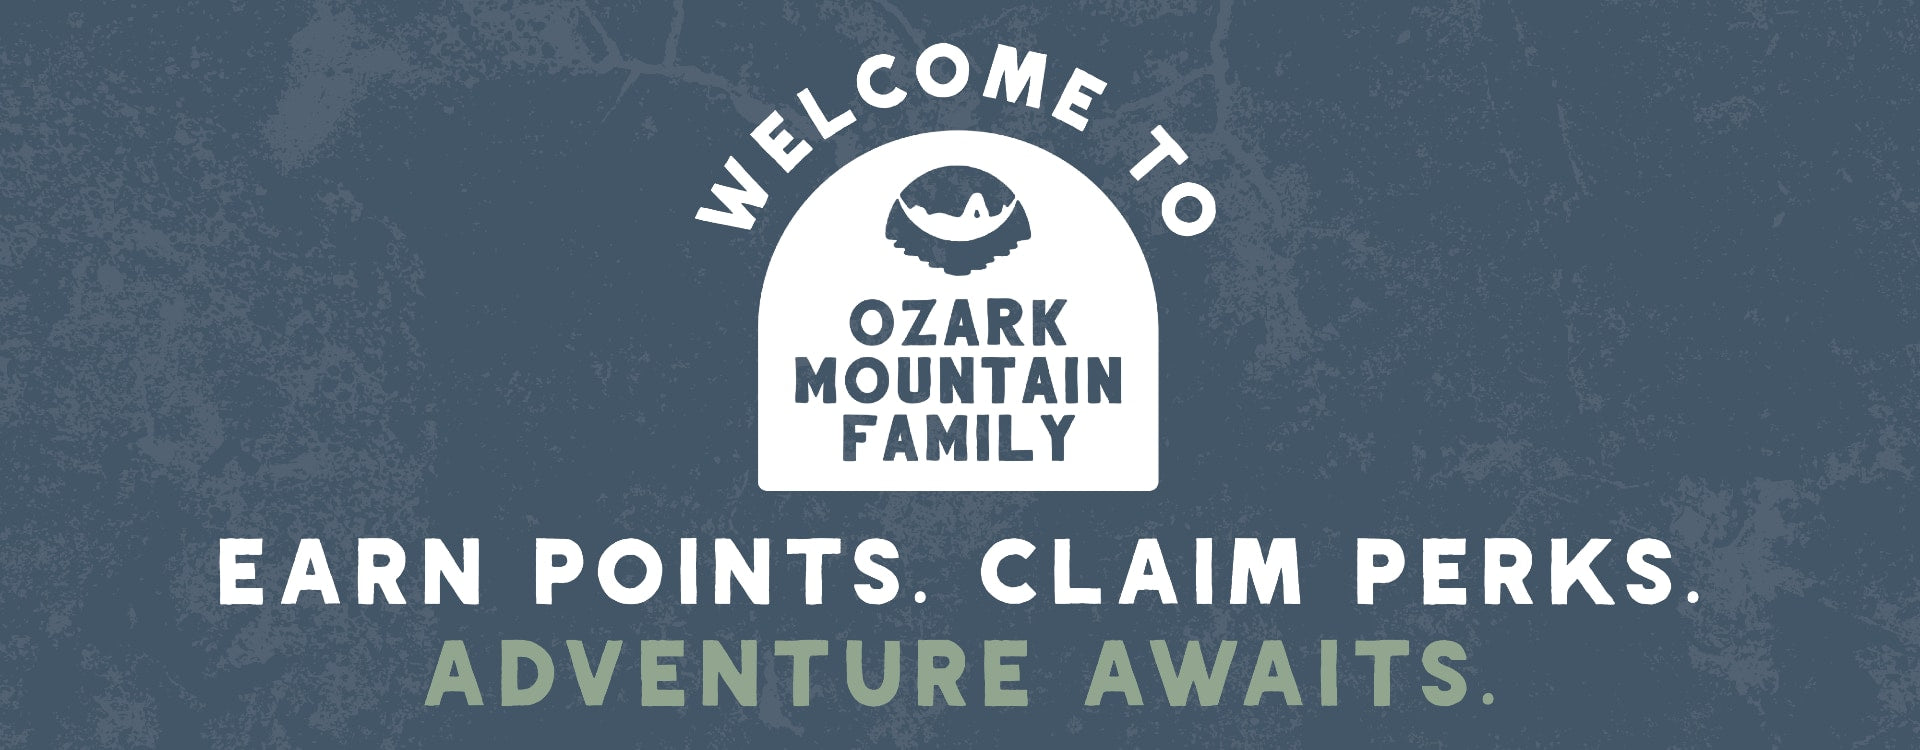 Ozark Mountain Family Banner with logo